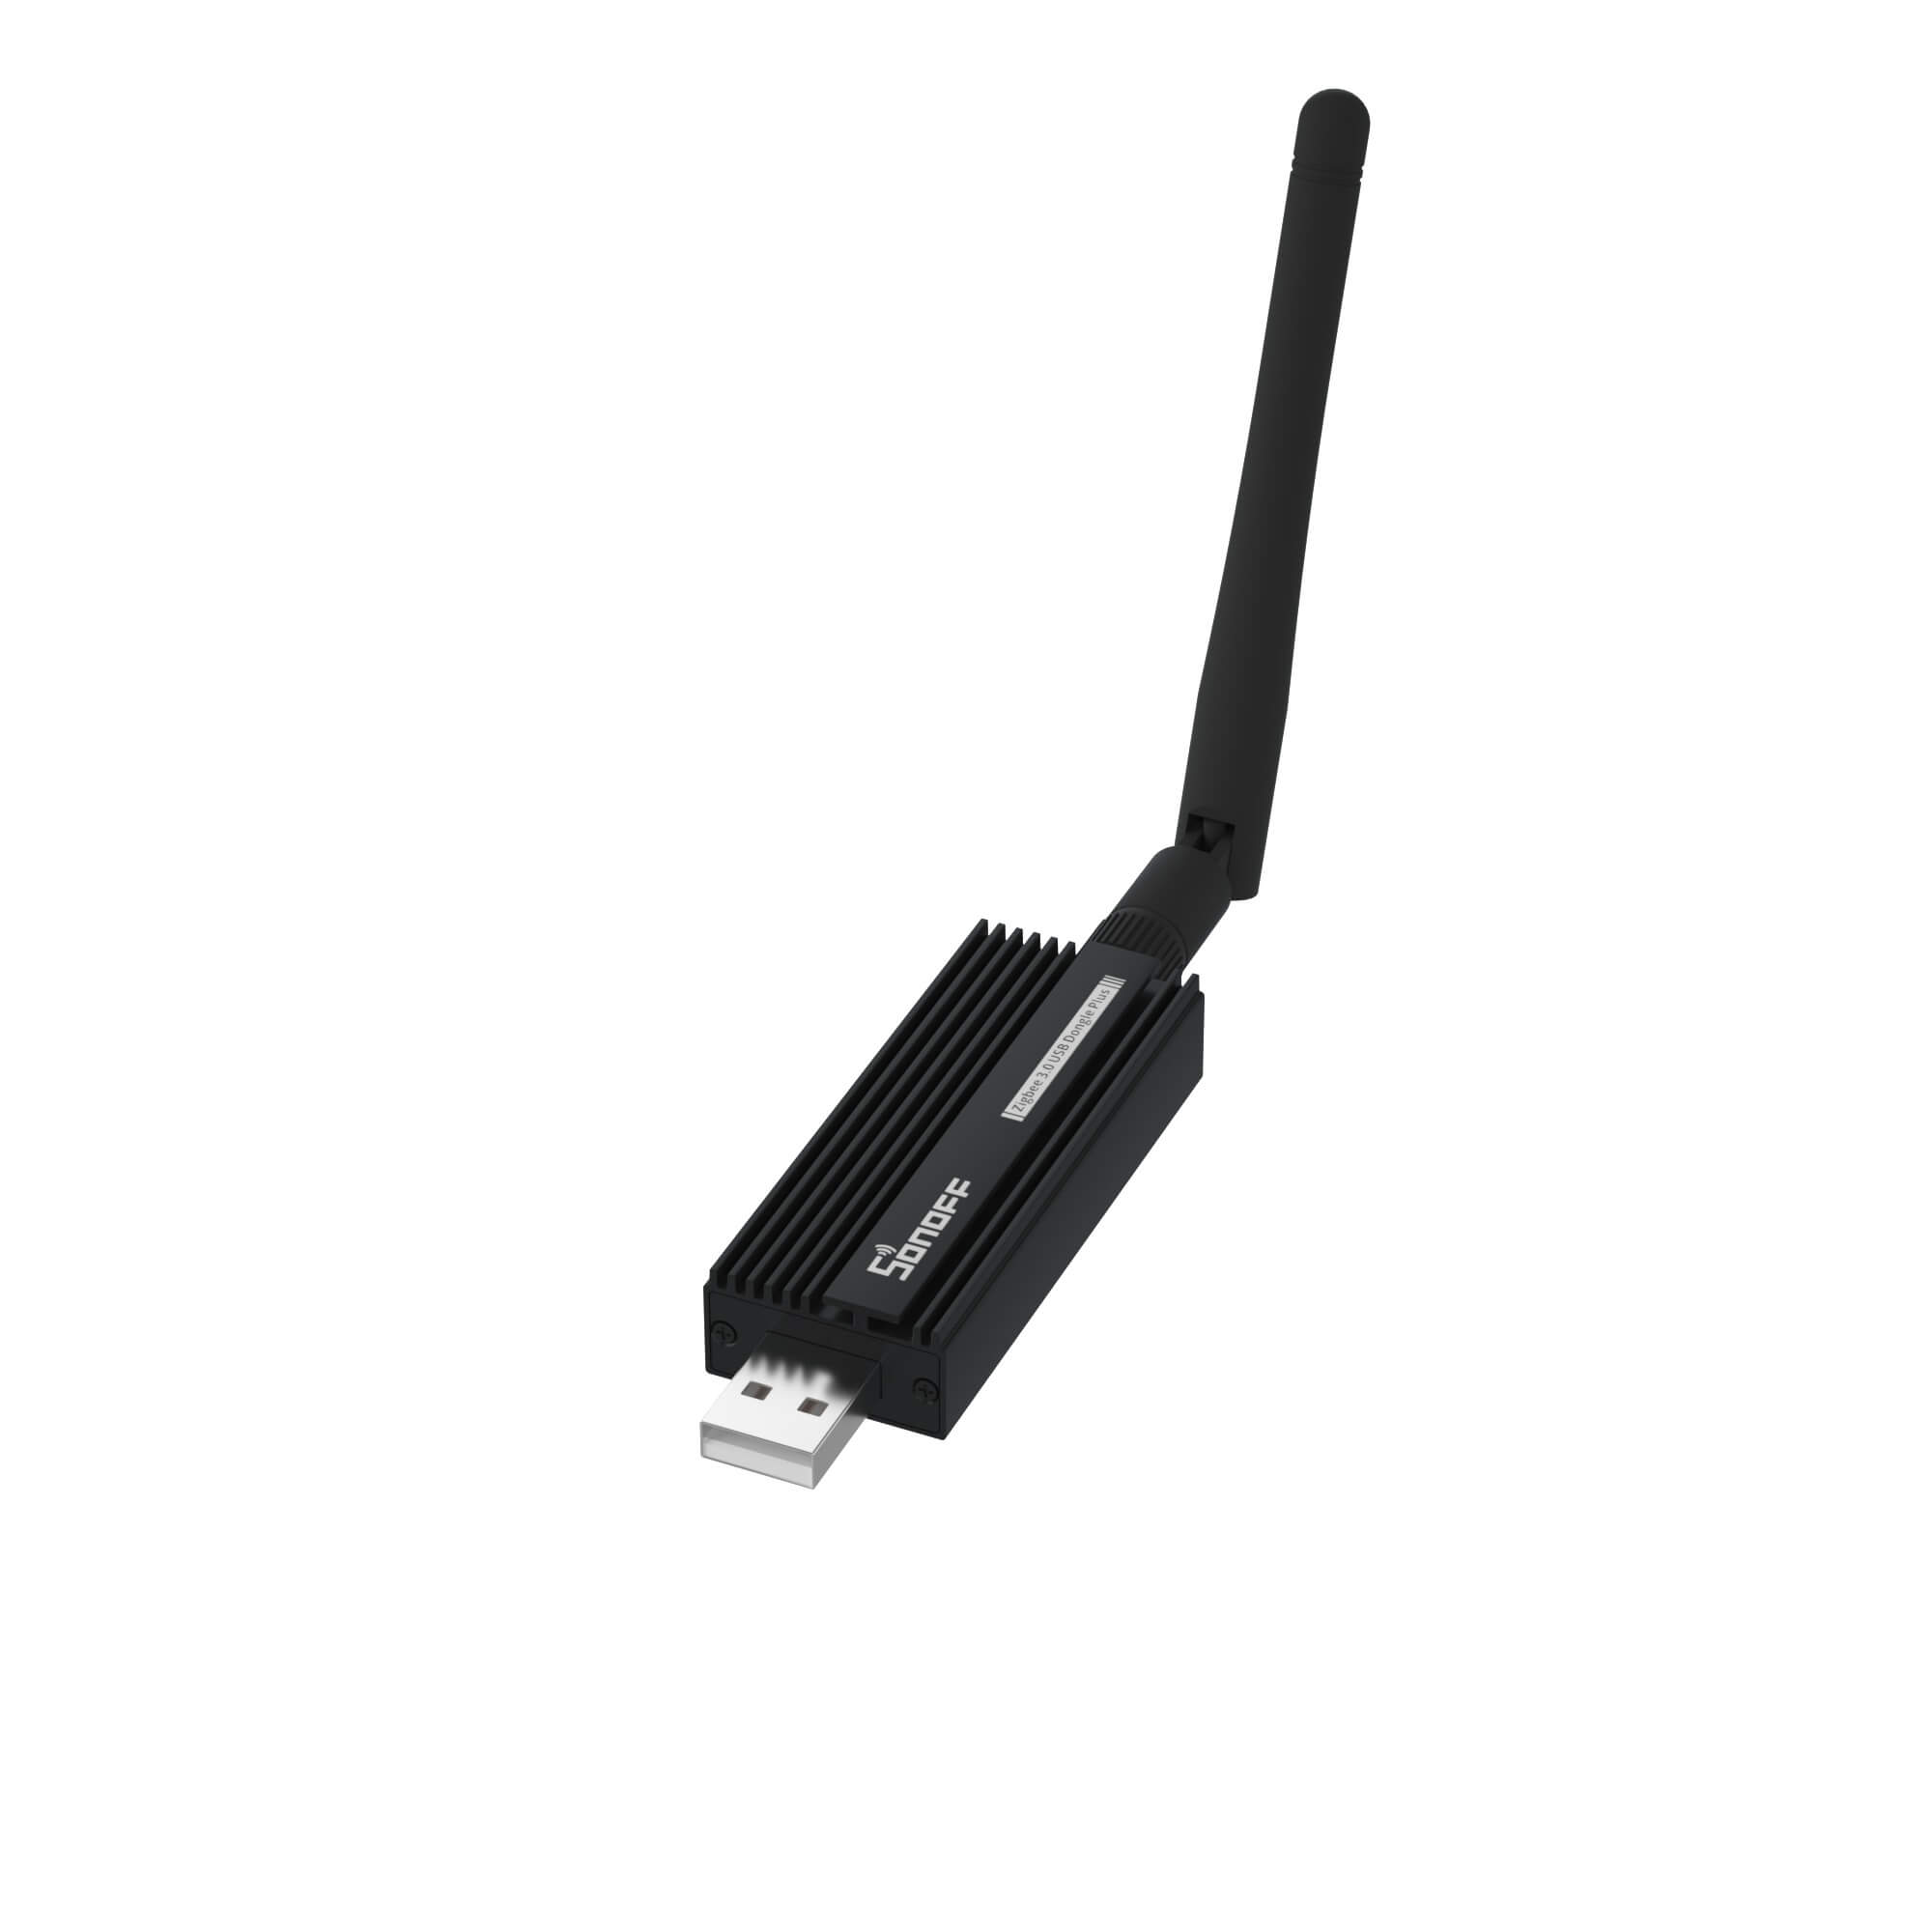 SONOFF Zigbee 3.0 USB Dongle Plus Gateway,Universal Zigbee USB Gateway with  Antenna for Home Assistant, IoBroker, Wireless Zigbee 3.0 USB Adapter(2